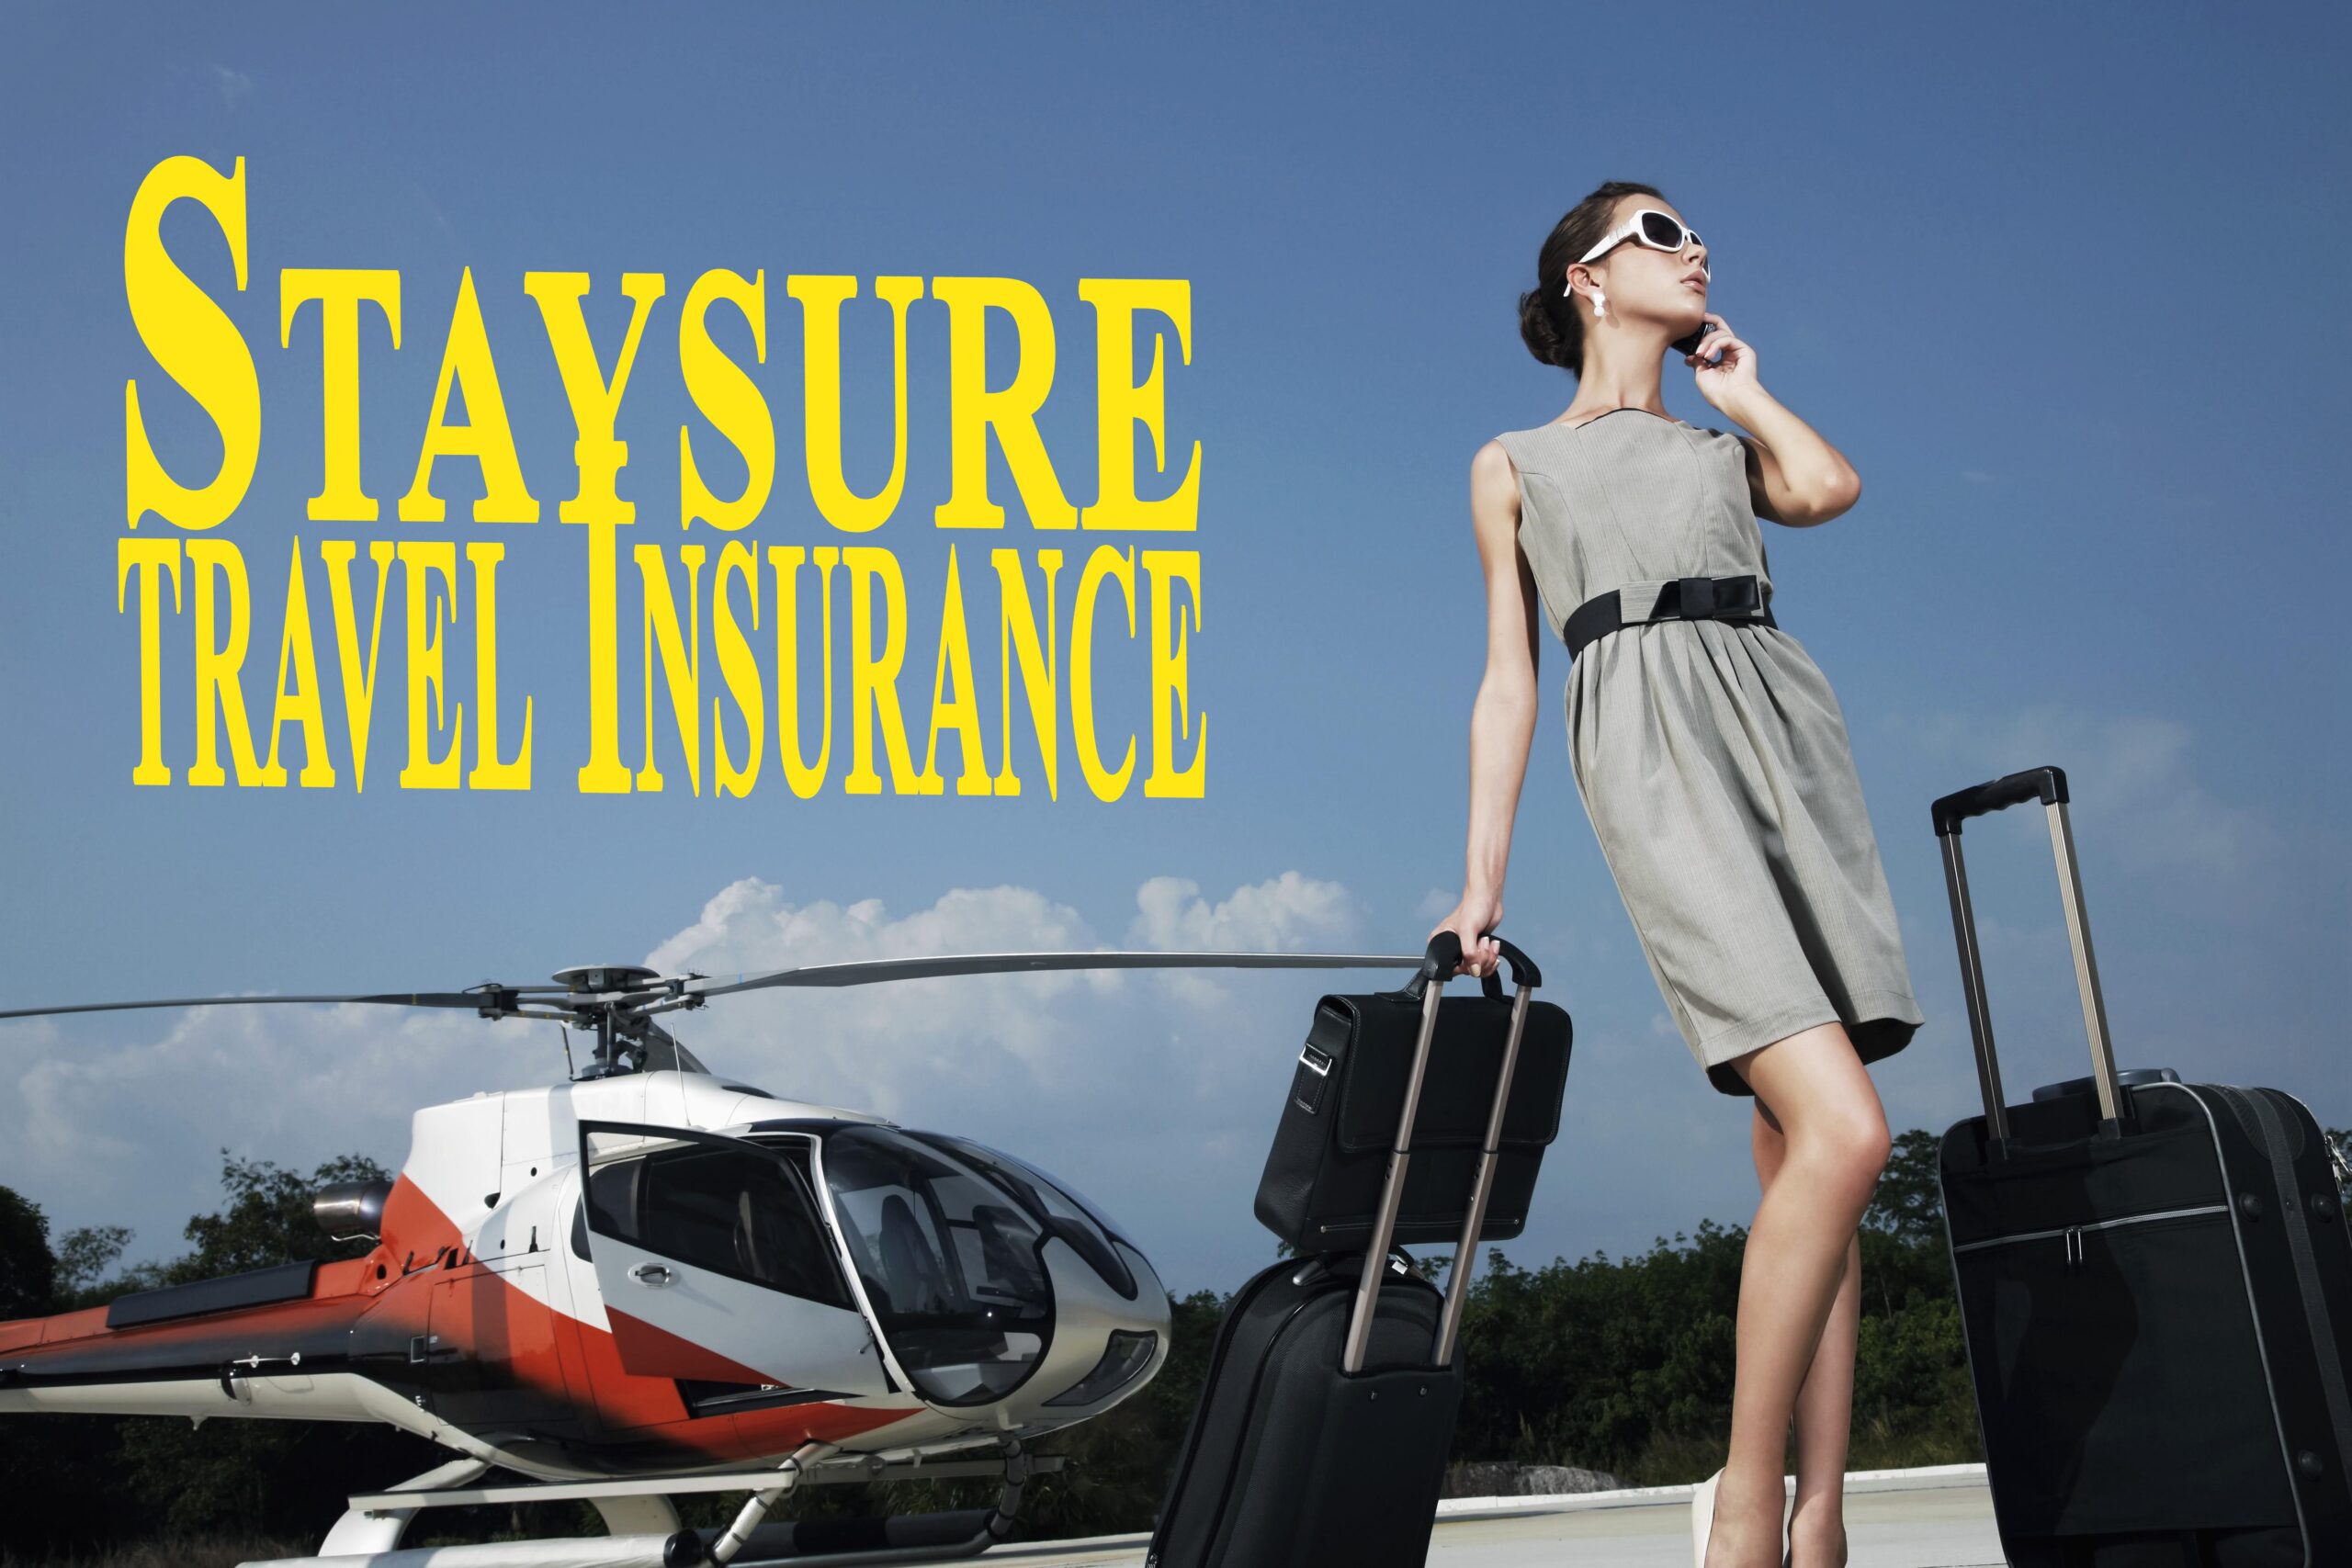 staysure travel insurance actor